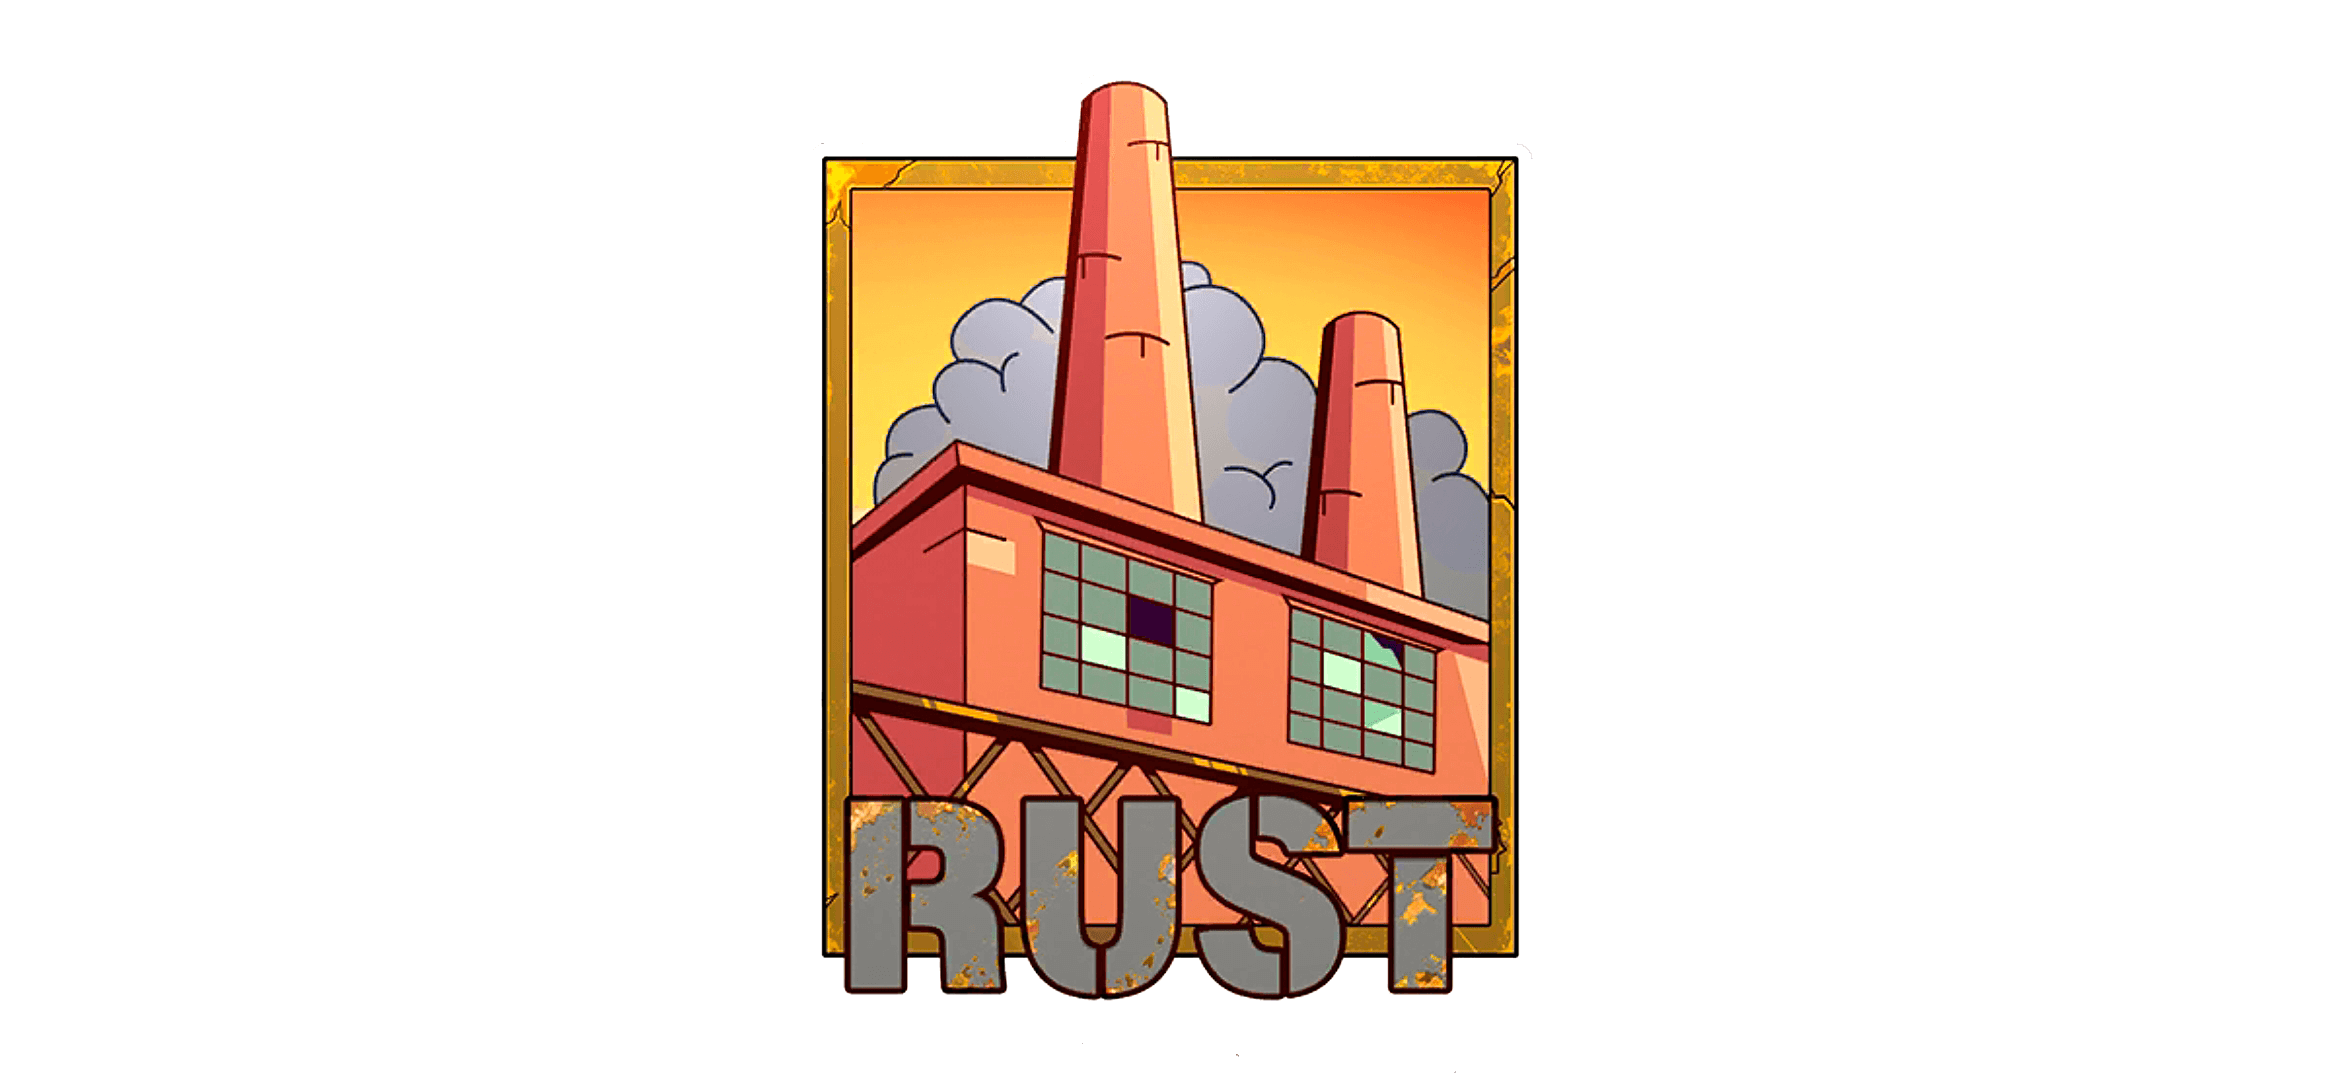 Rust can kill you фото 110